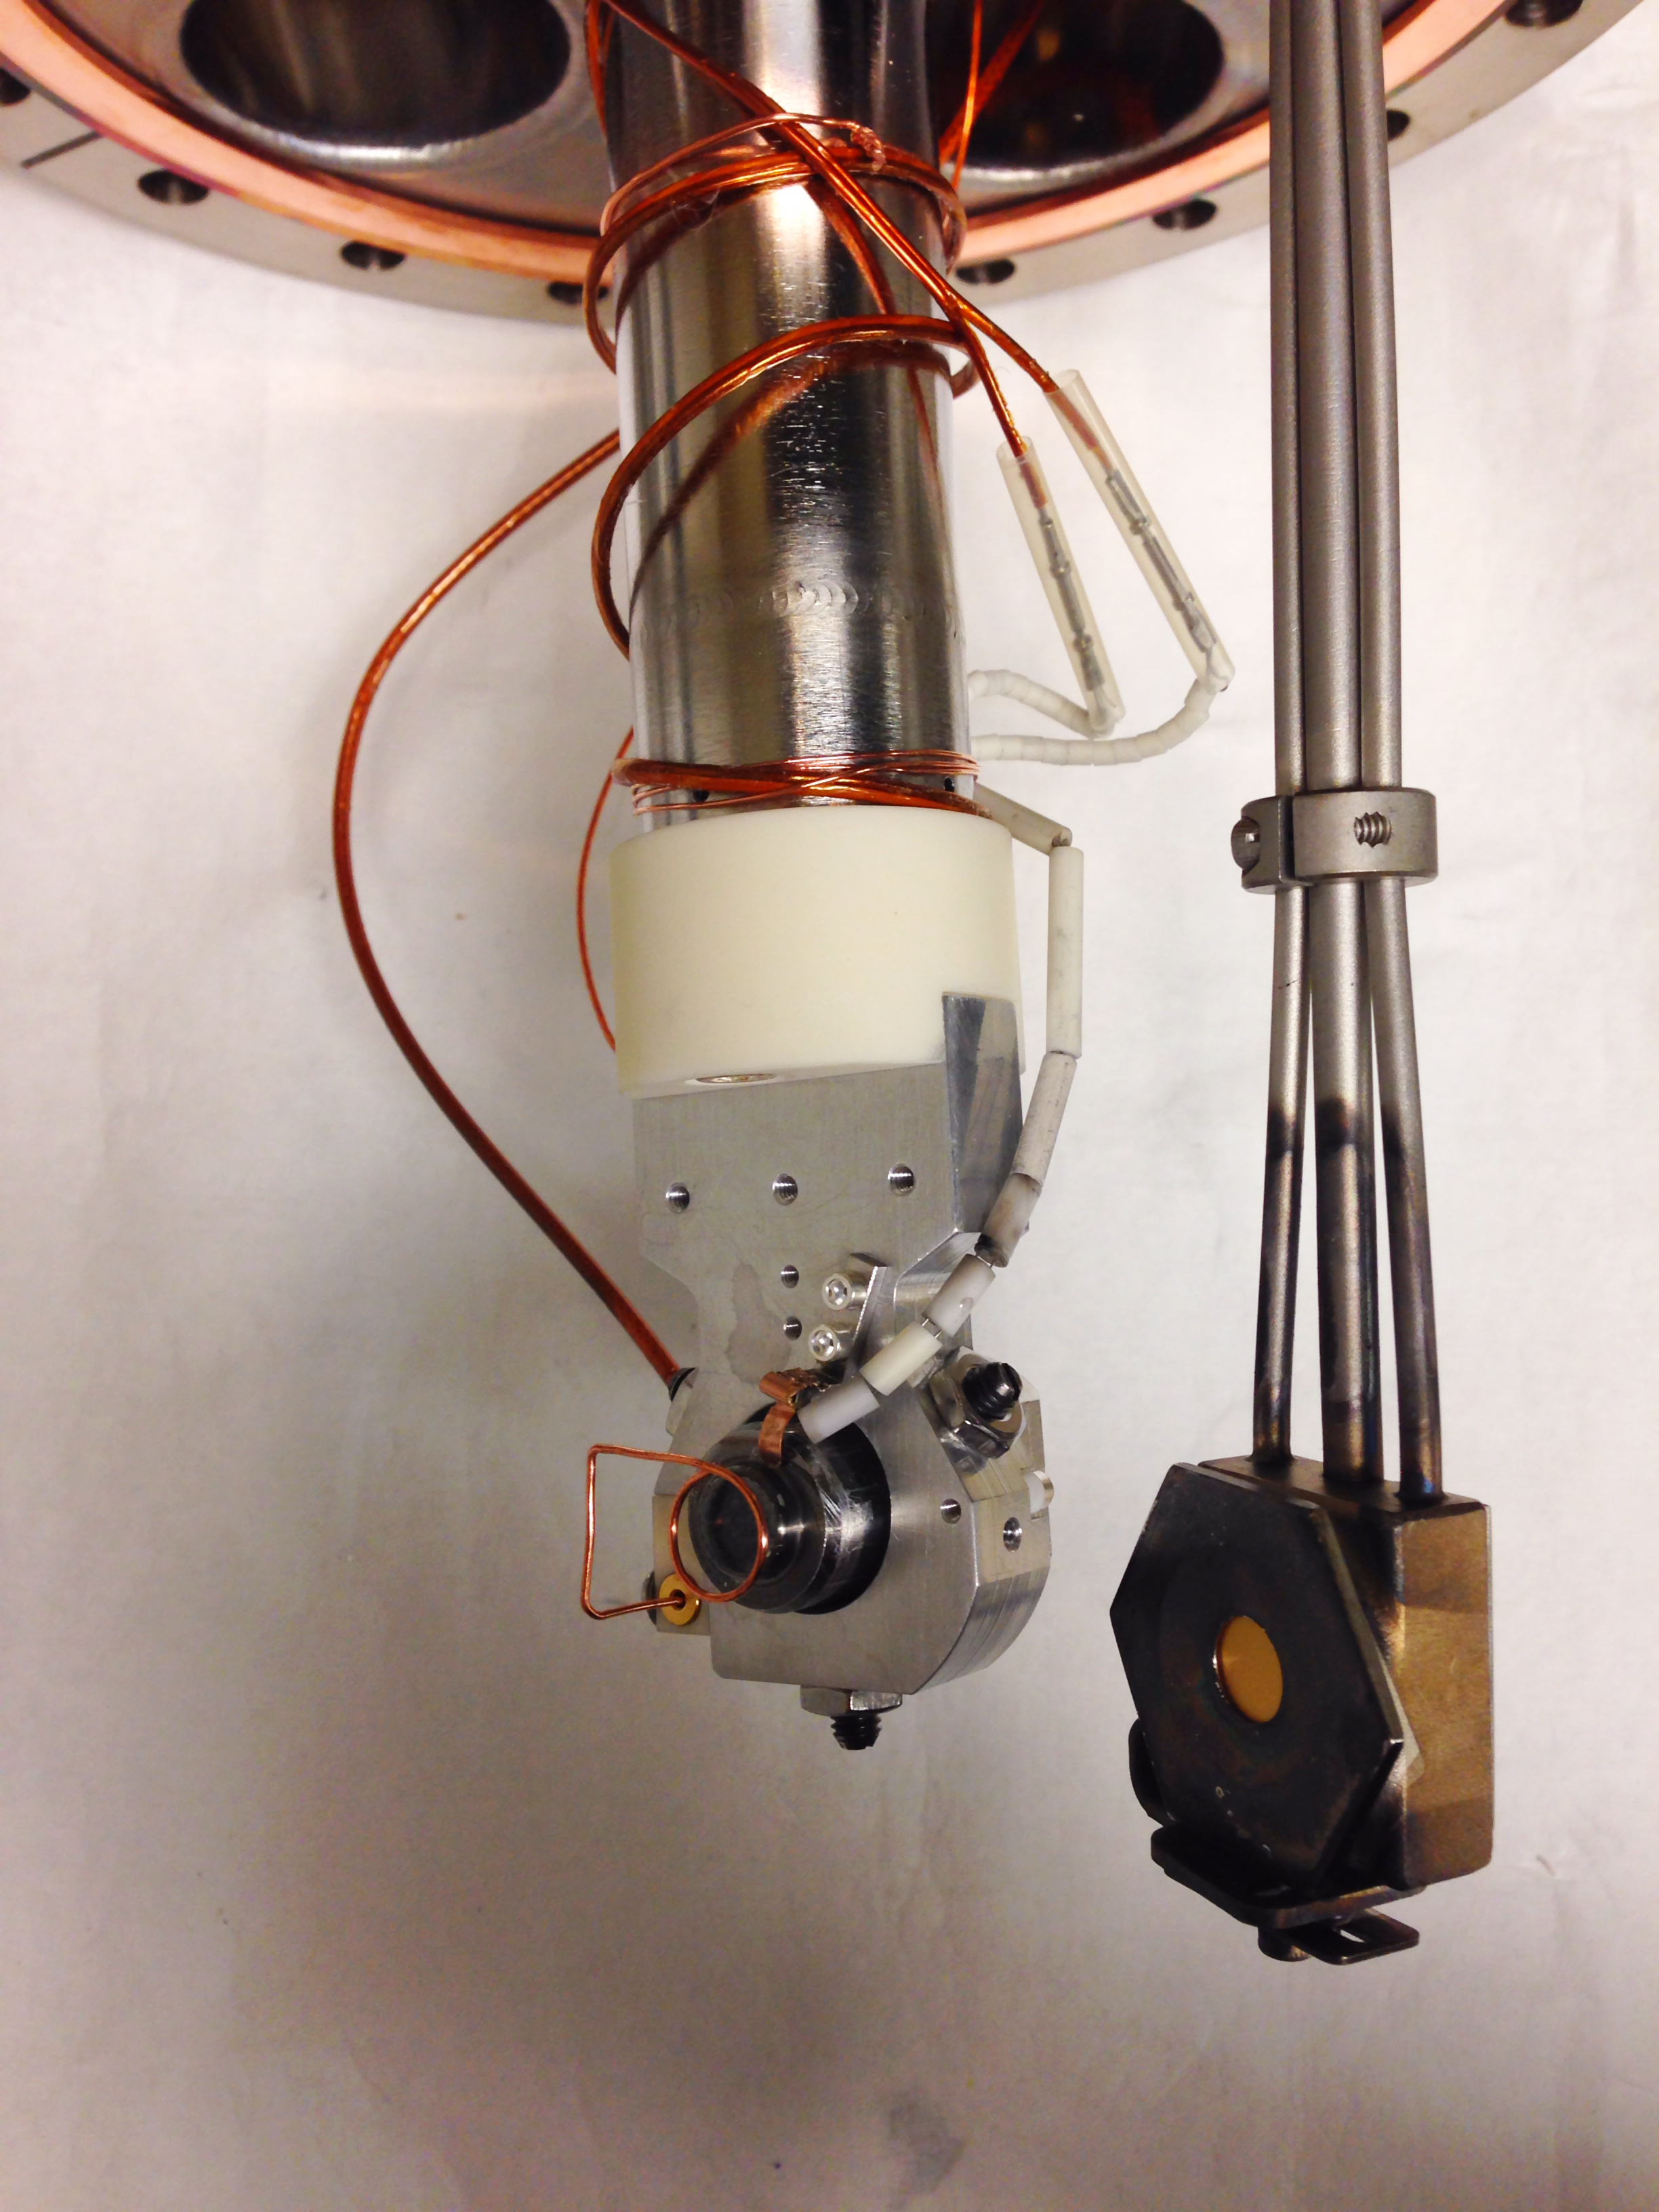 APEX Photocathode Deposition Heating System